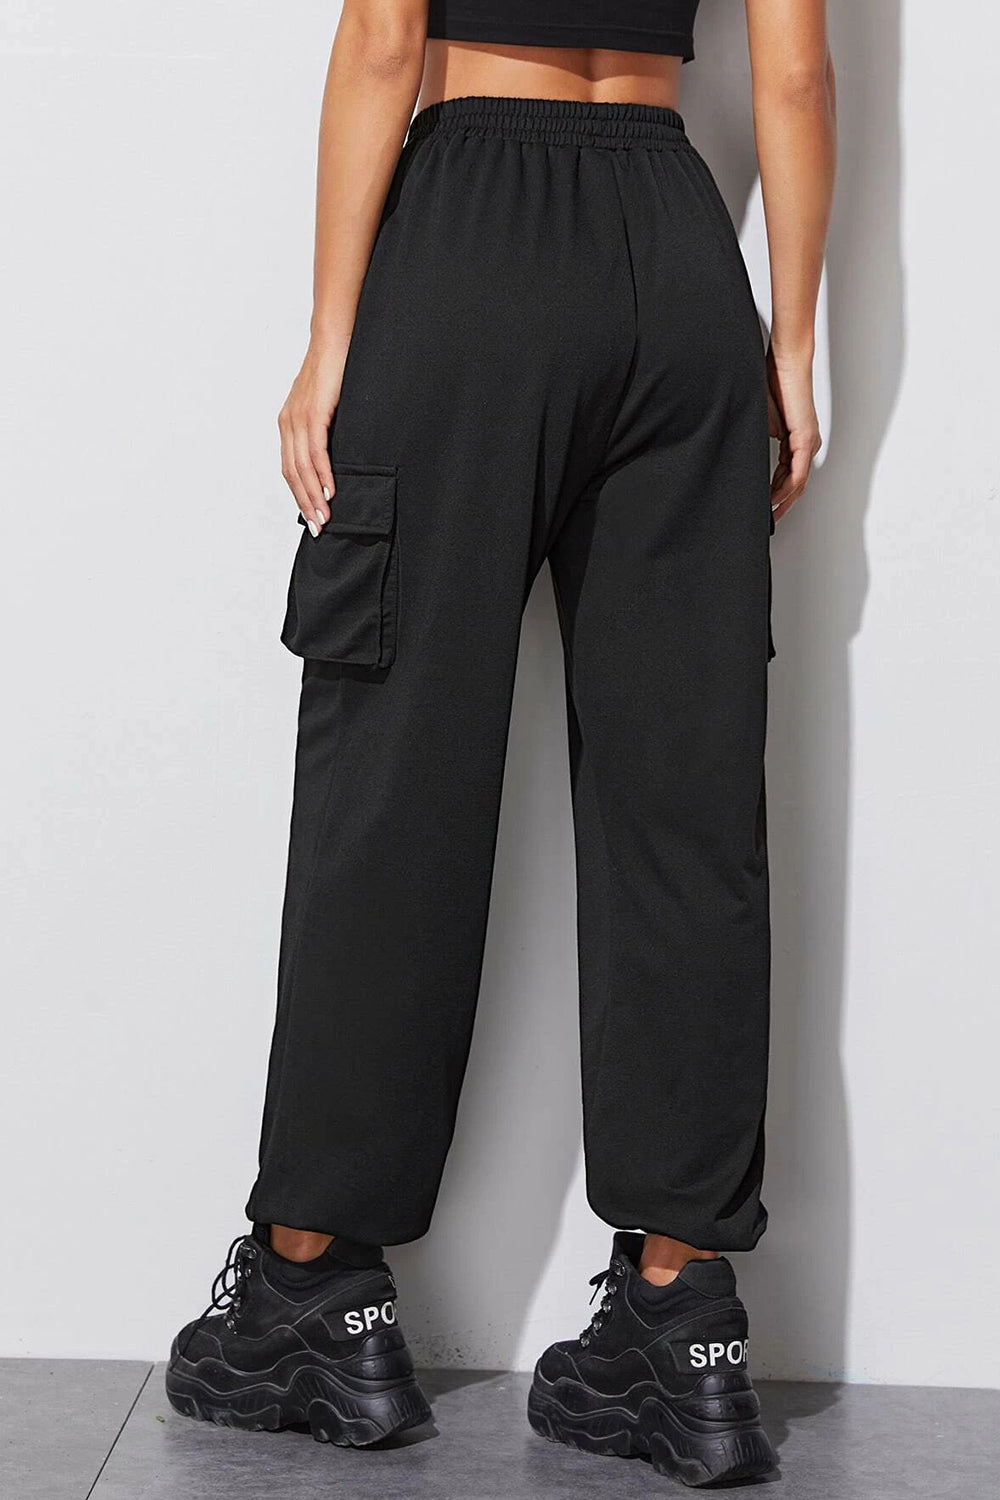 Trendsi Elastic Waist Cargo Pants Black / L